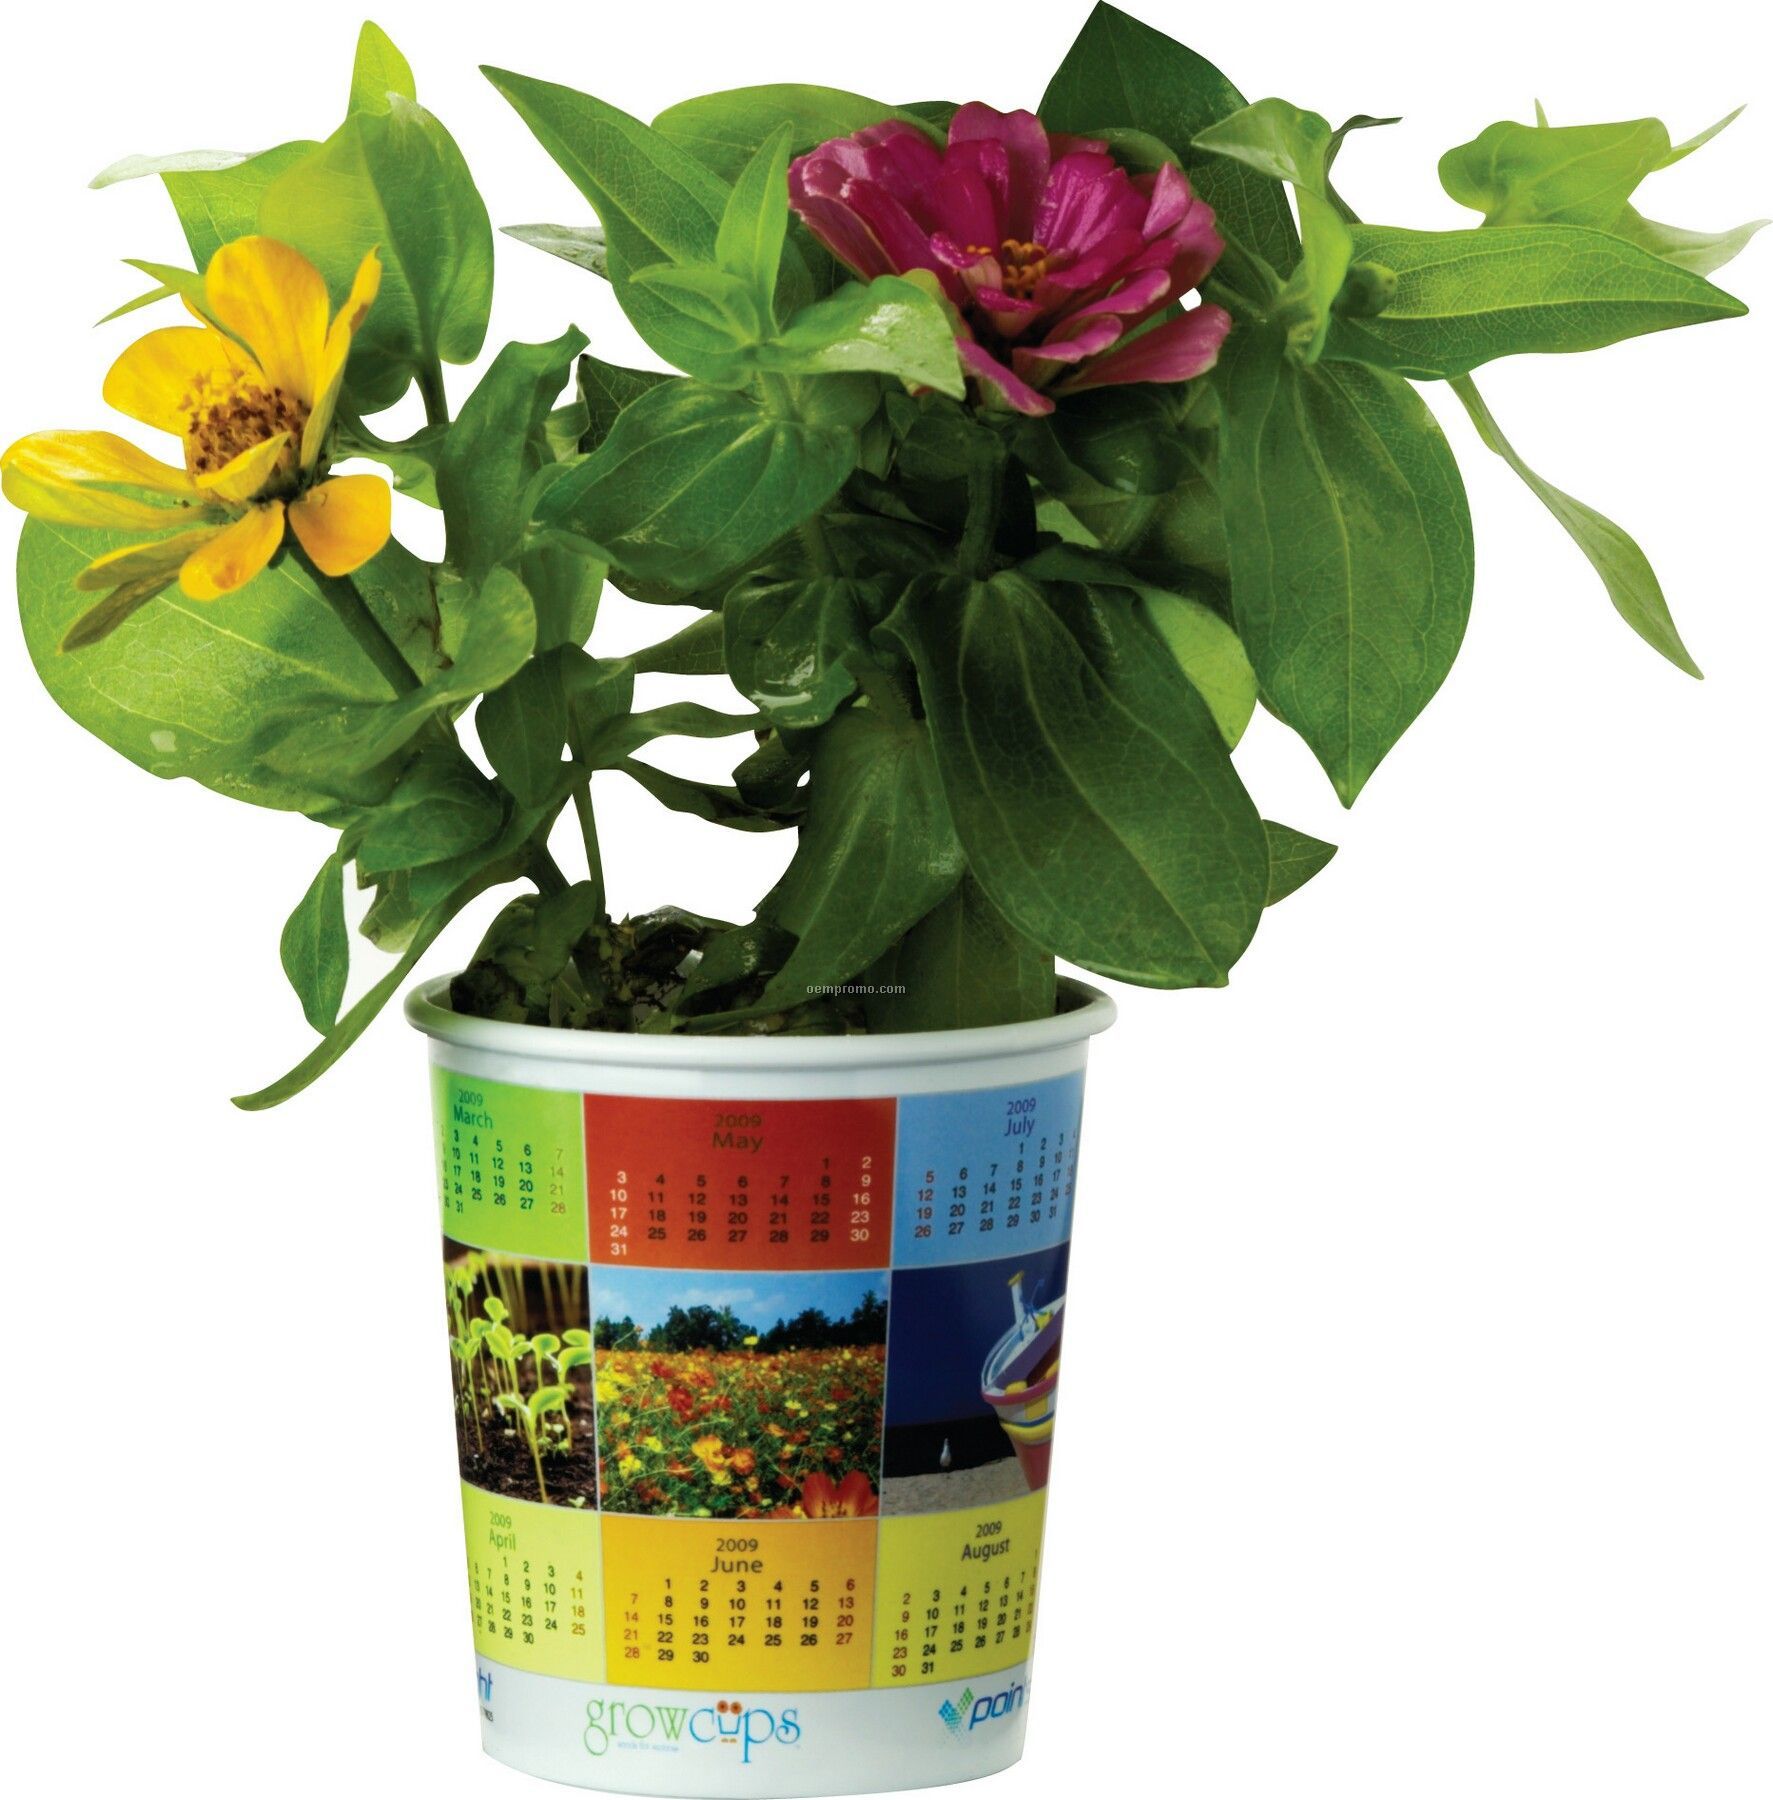 Grow Cups Eco-friendly Garden Kits - Calendar